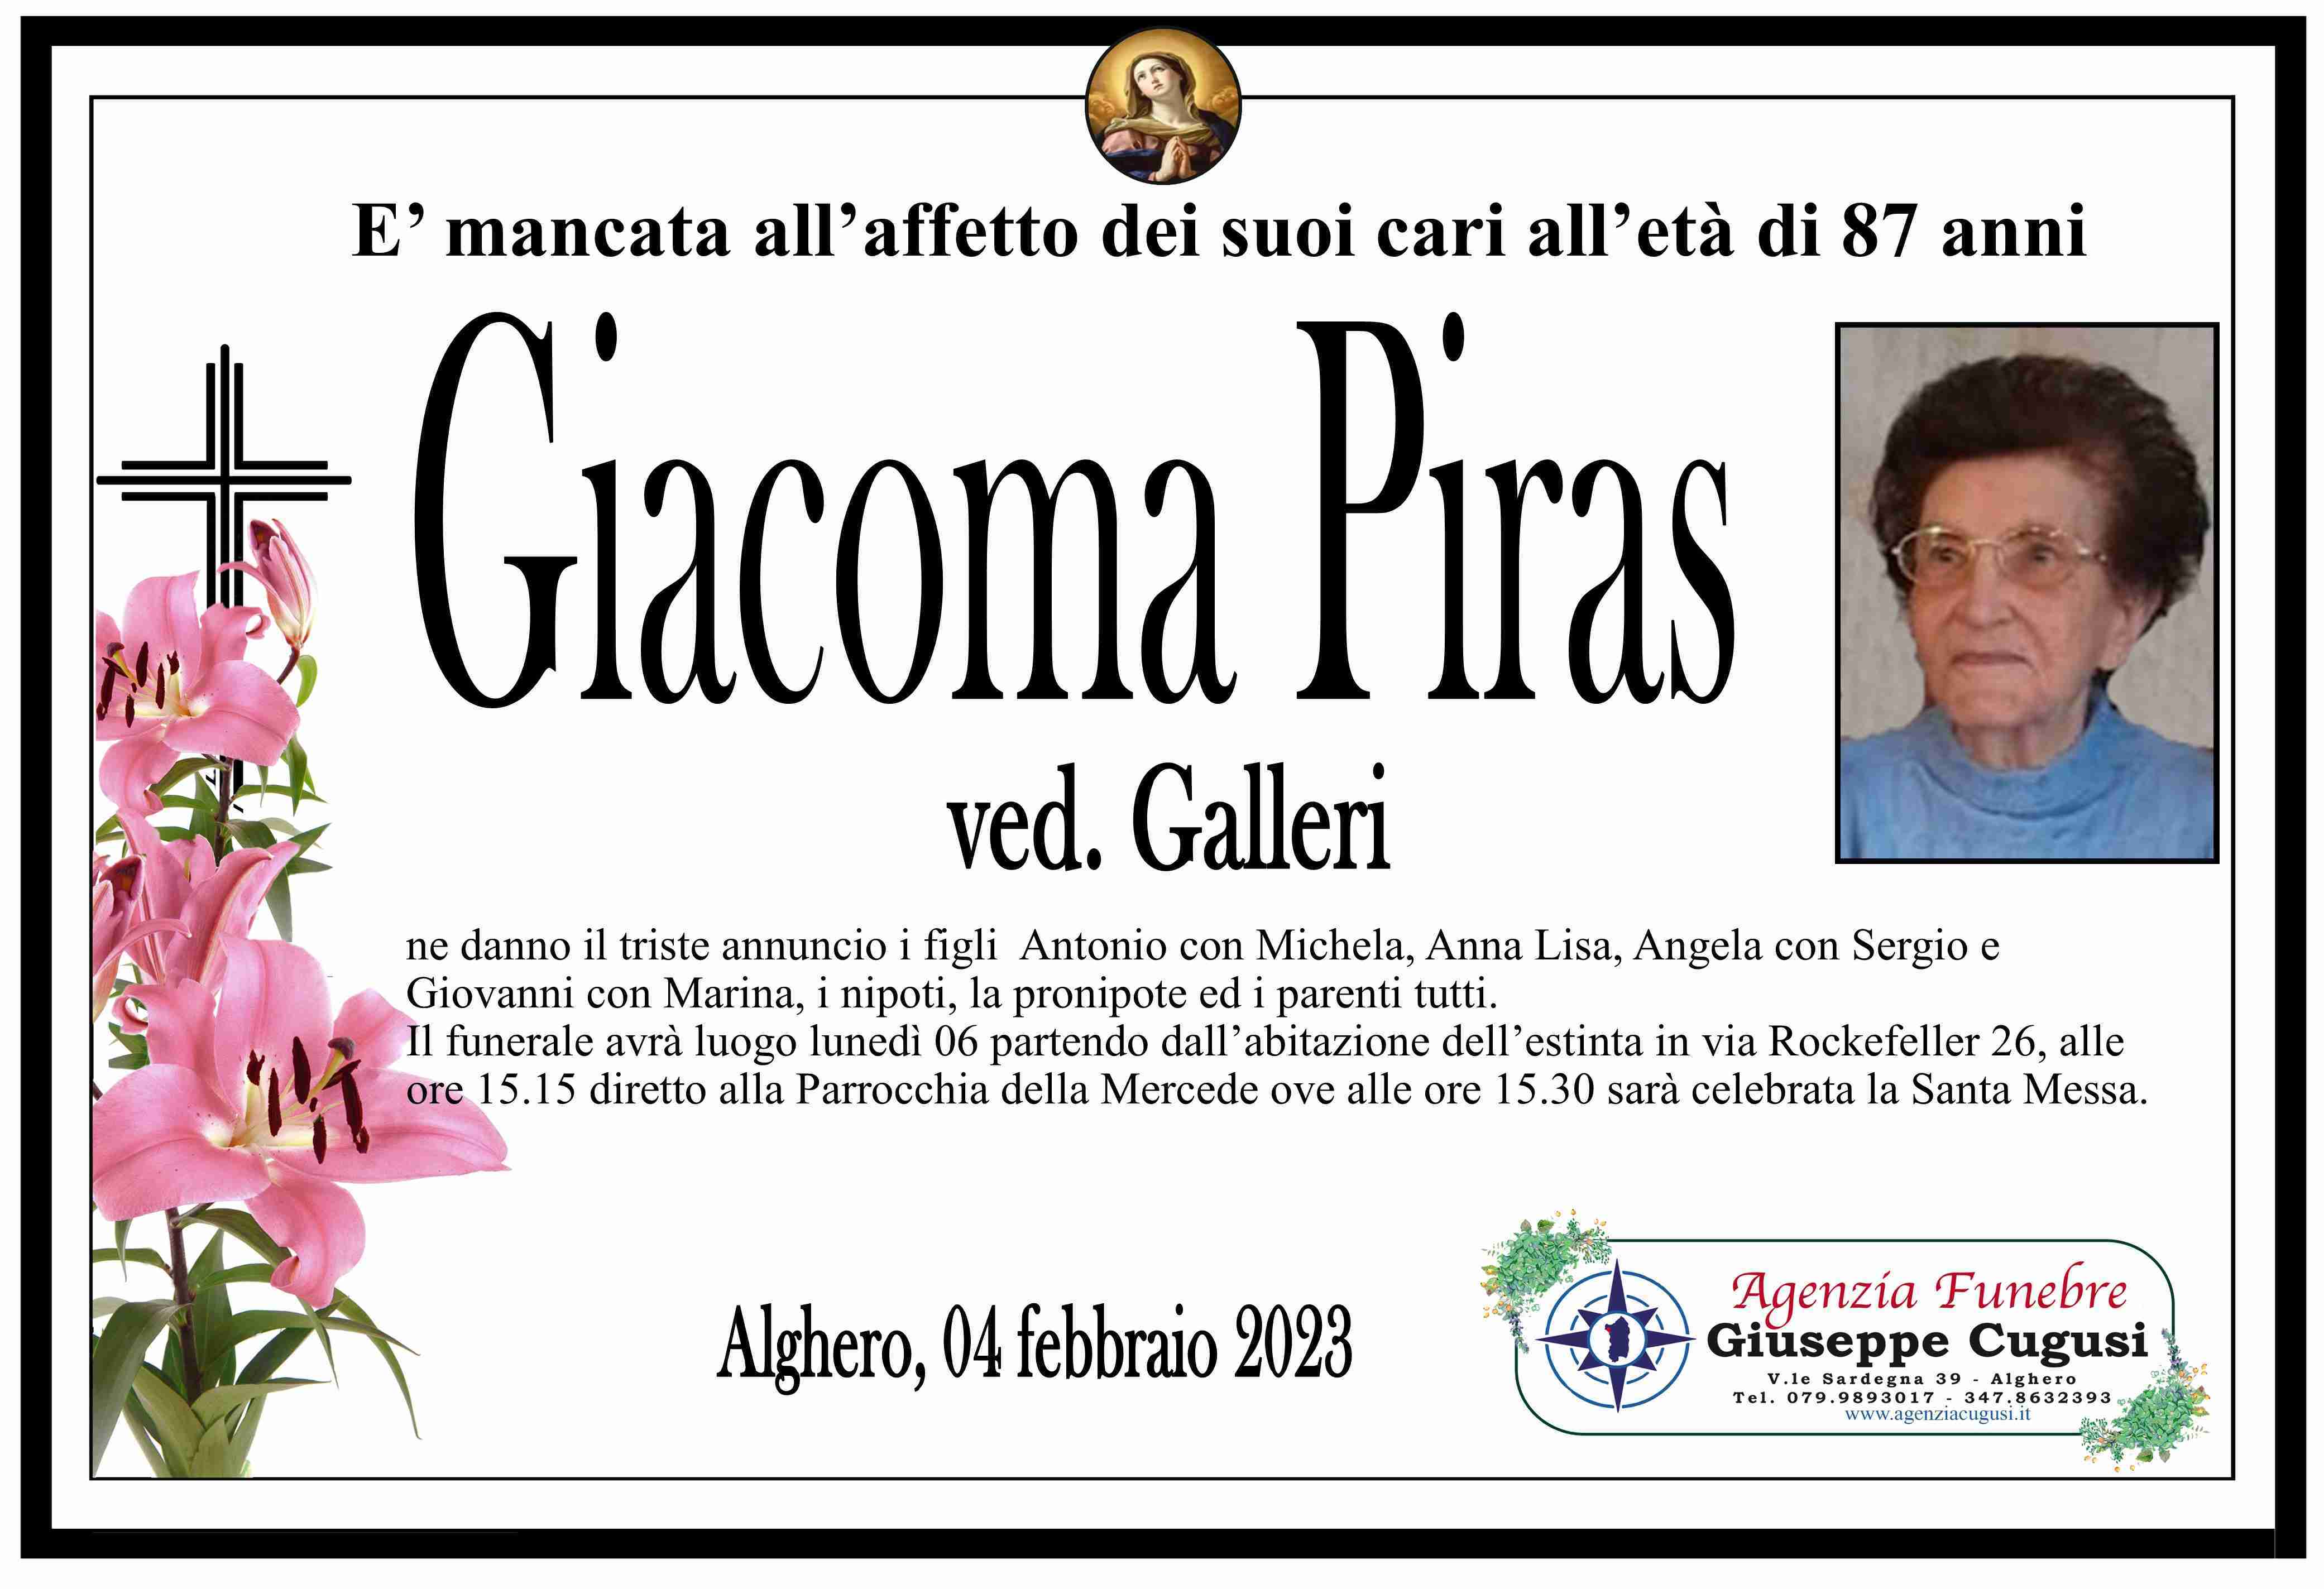 Giacoma Piras